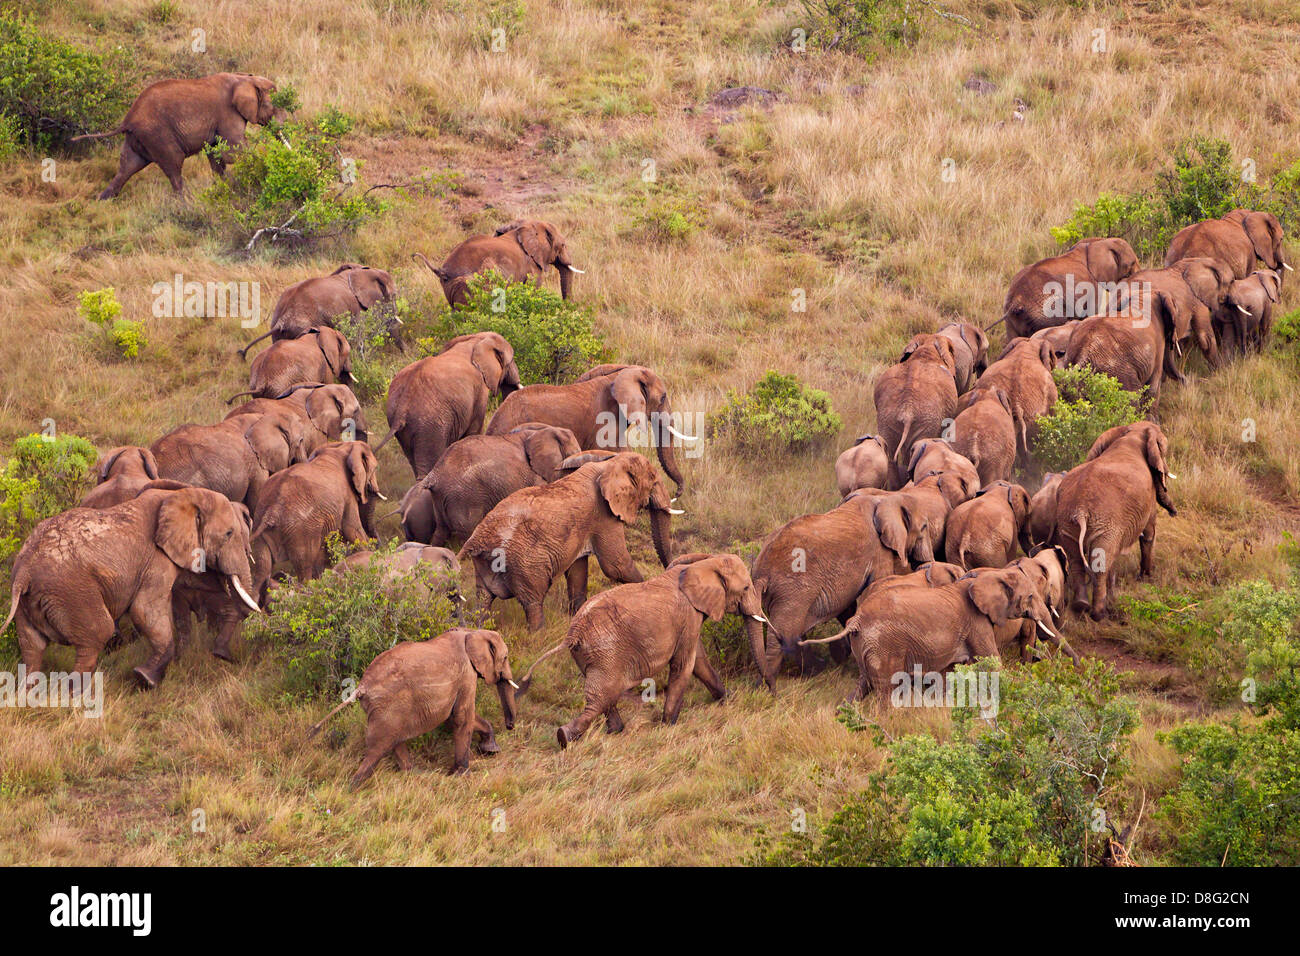 Vista aerea dell'elefante africano (Loxodonta africana) in Kenya.Dist. Africa sub-sahariana. Foto Stock